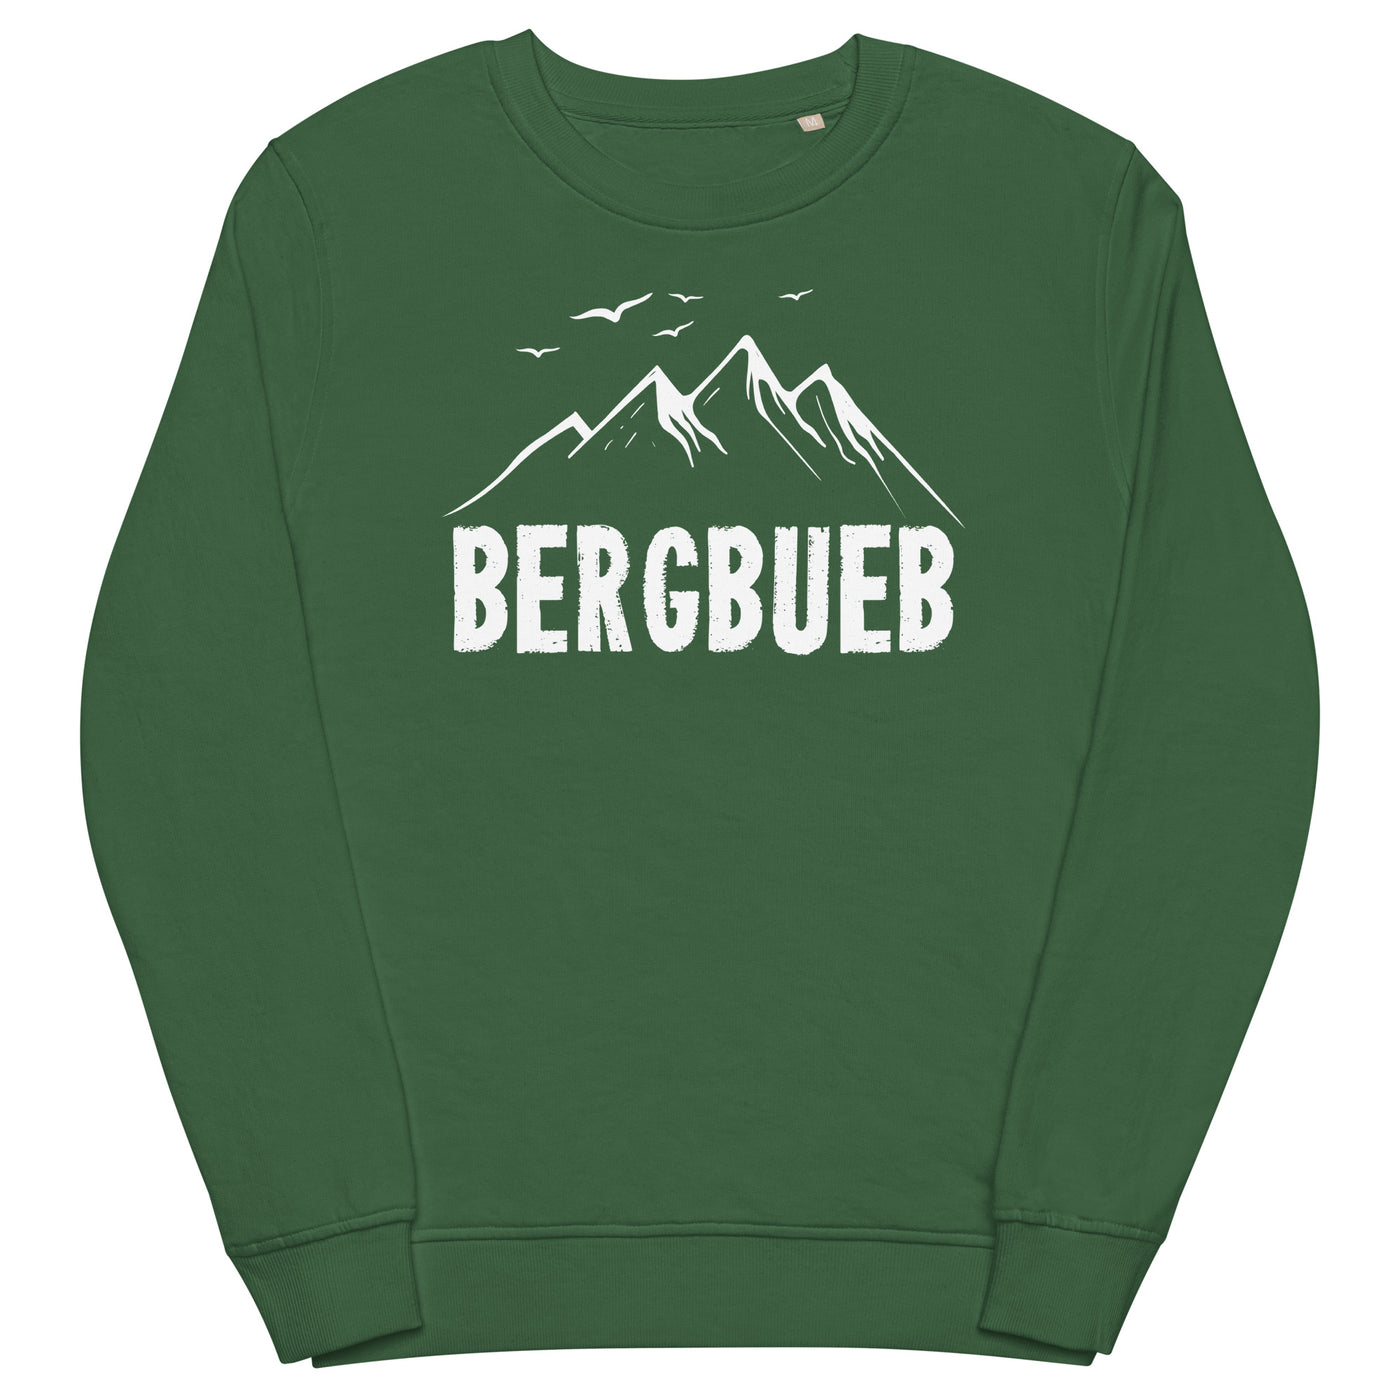 Bergbueb - Unisex Premium Organic Sweatshirt berge Bottle Green